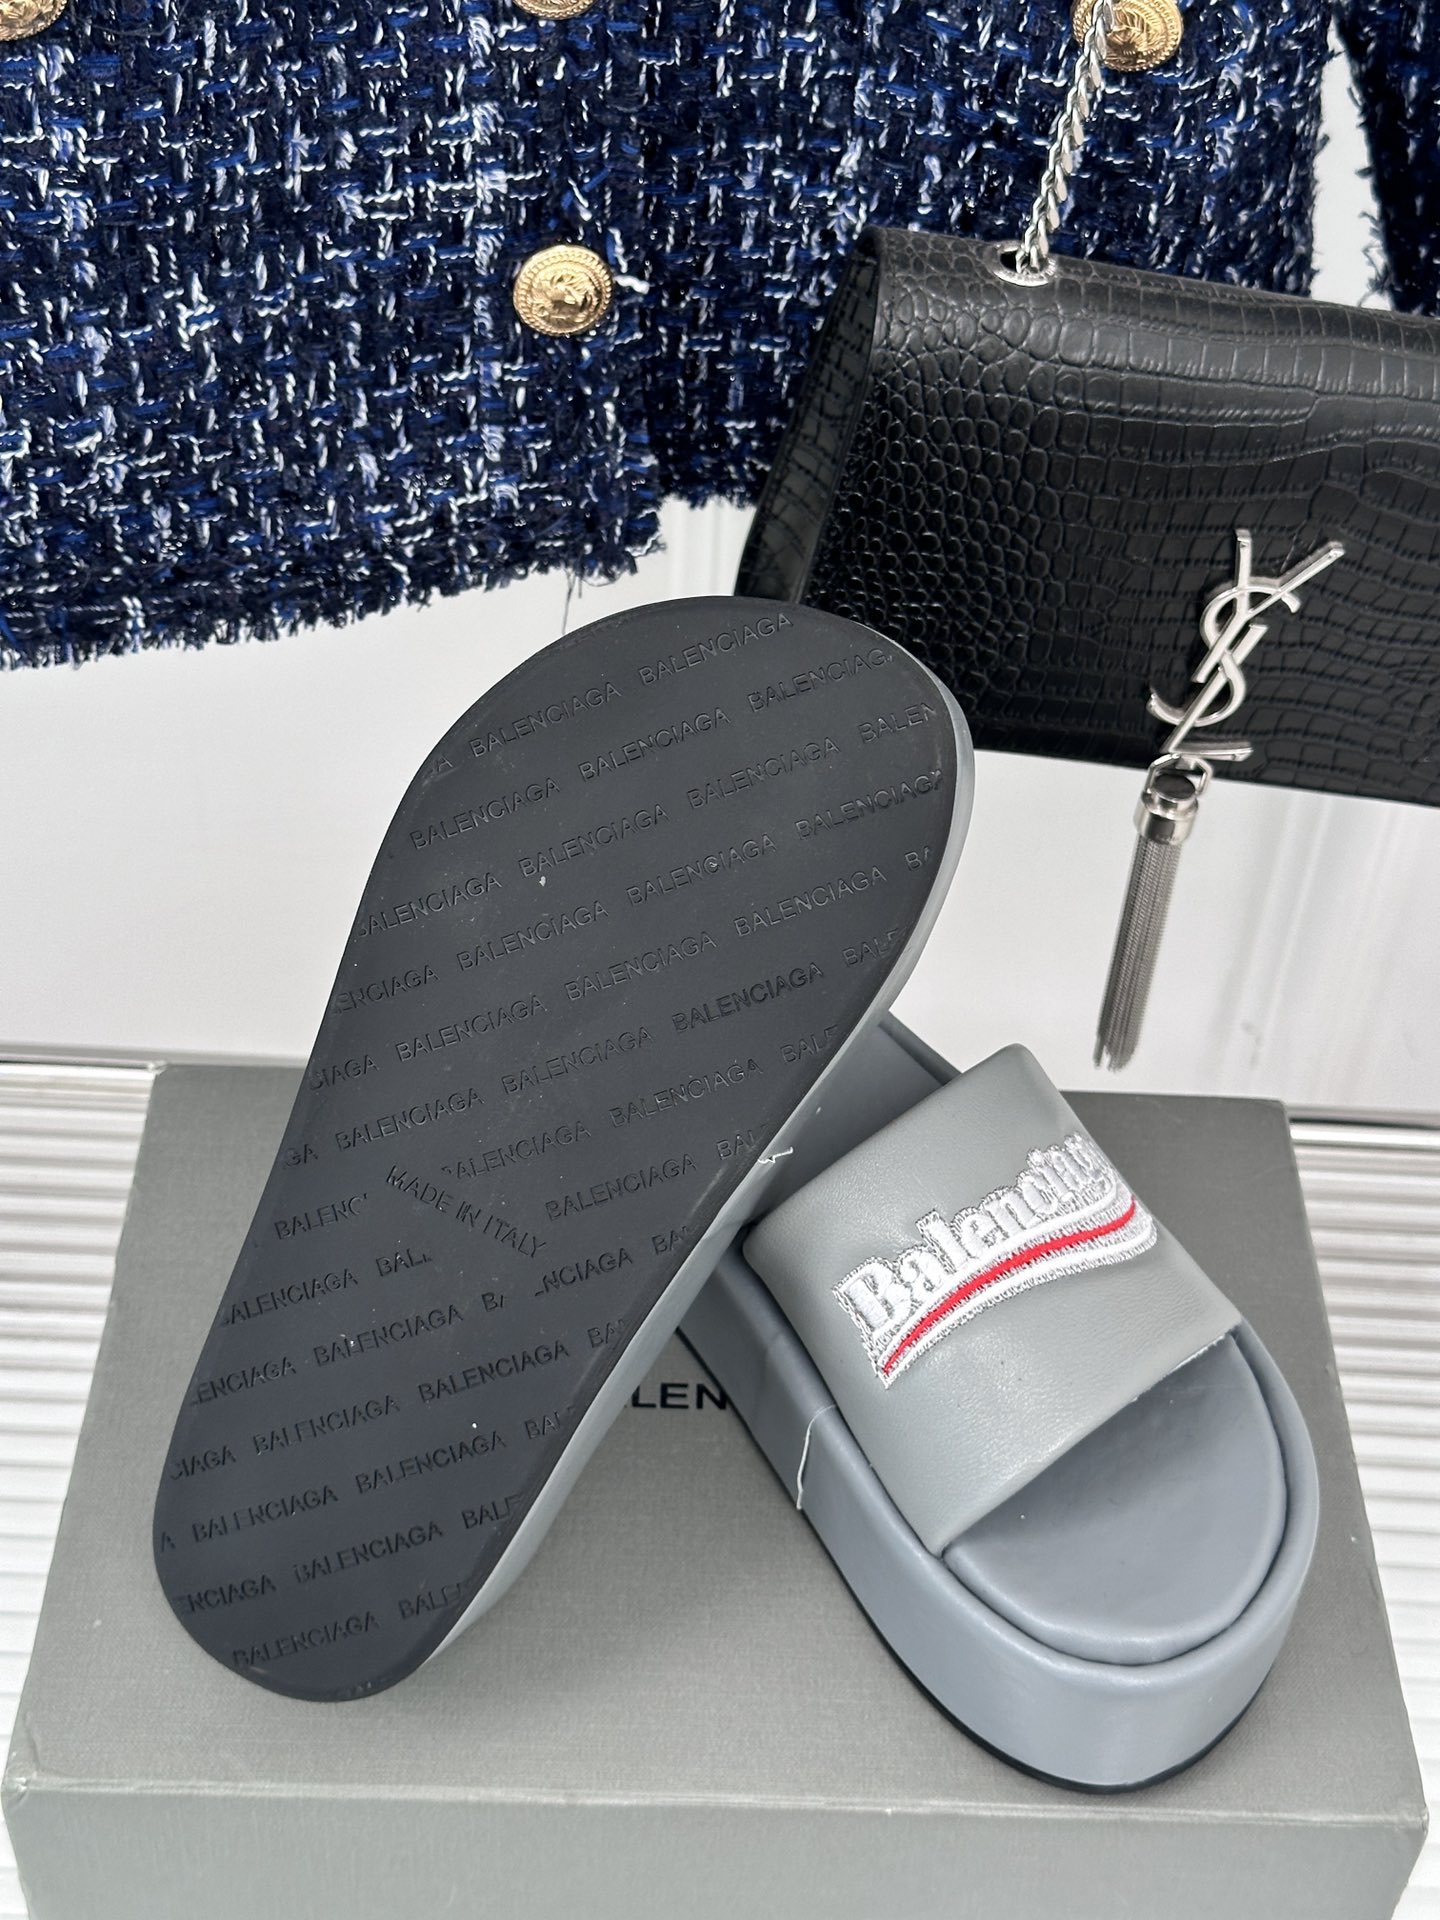 Balenciaga巴黎世家24S春夏新品厚底拖鞋独家正确版本原版开发时尚圈内各大网红明星又在拼命种草的